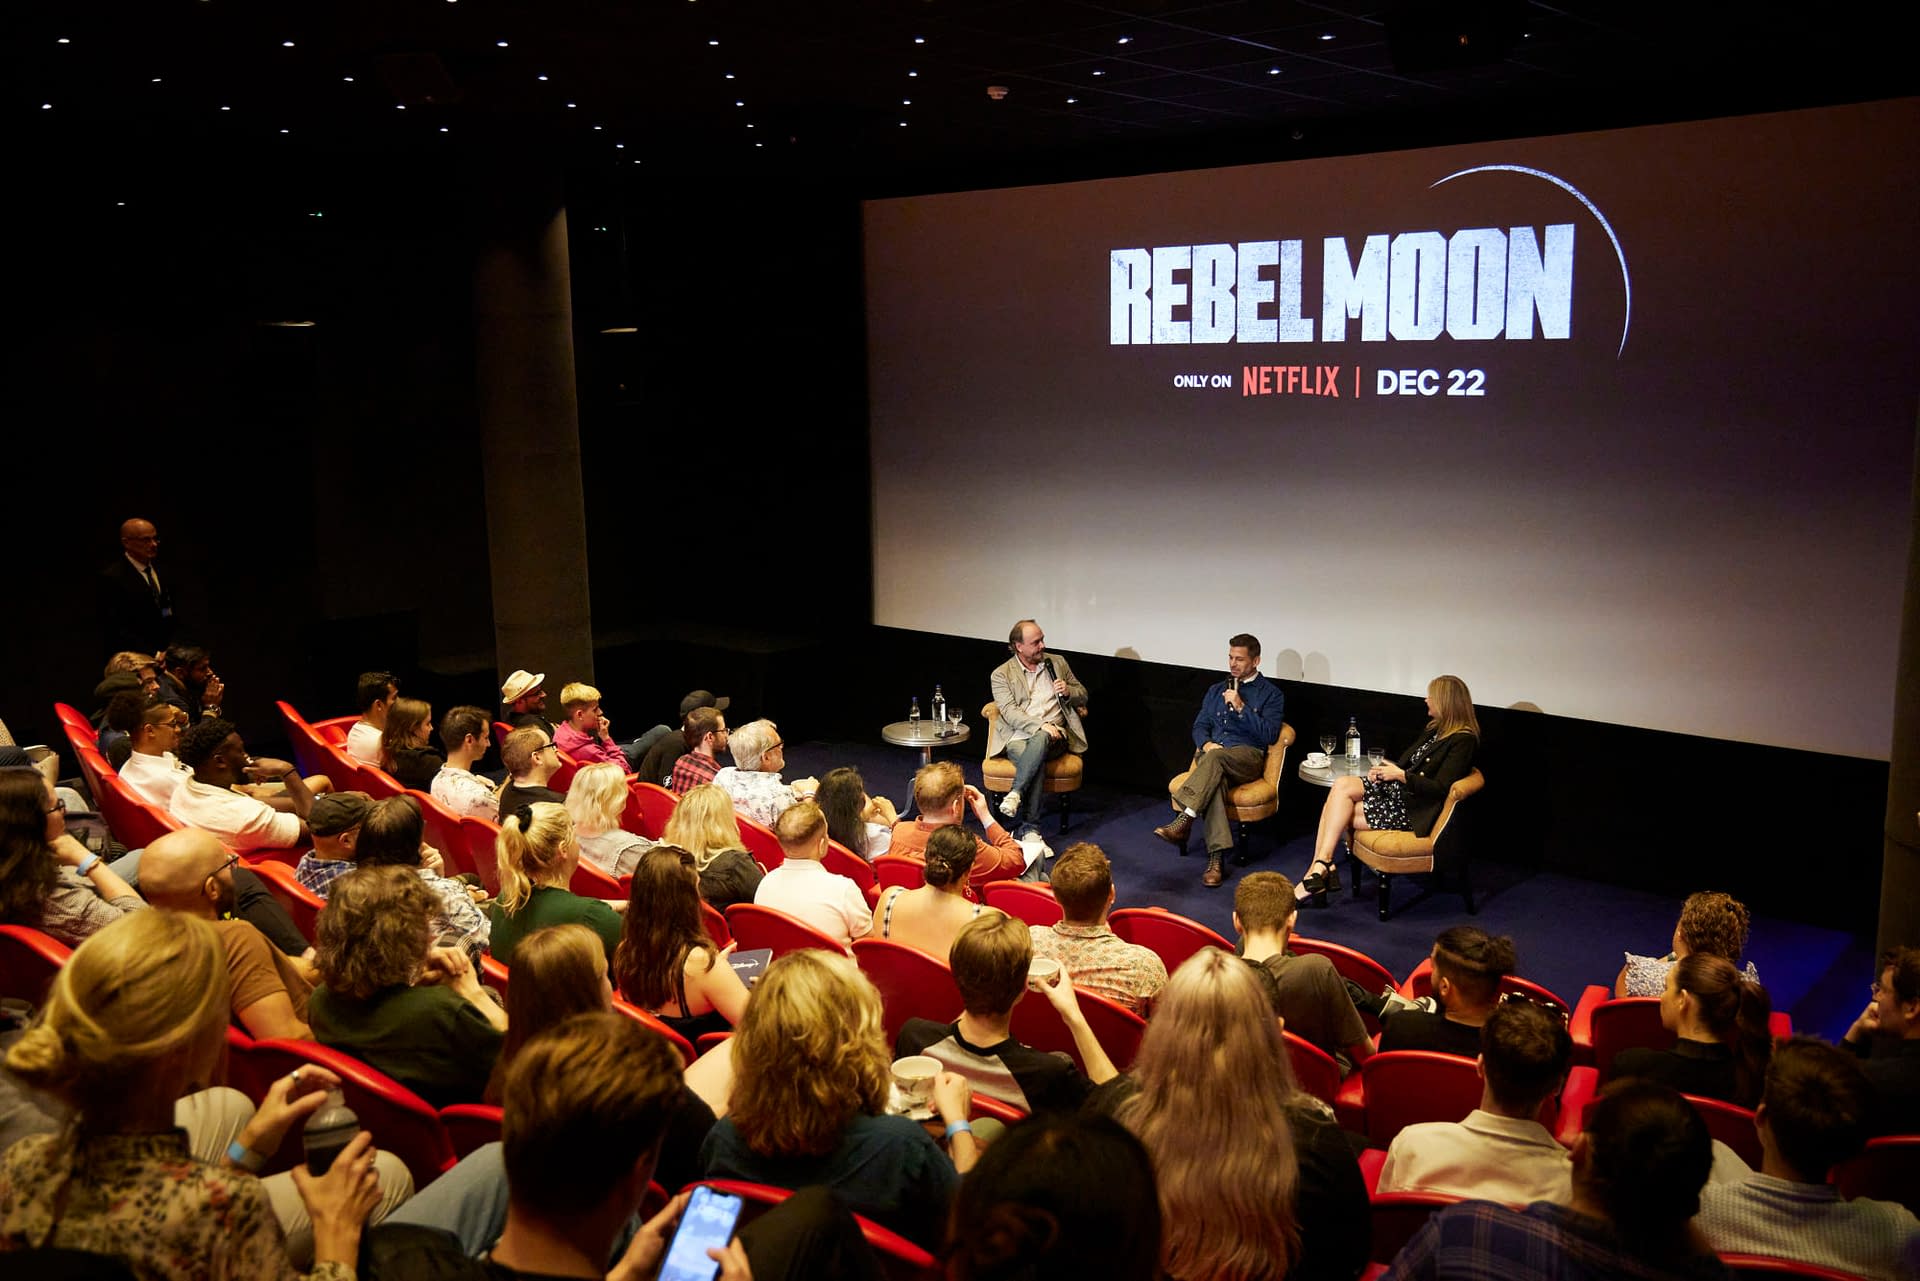 REBEL MOON TRAILER EVENT WITH ZACK SNYDER - Film Focus Online